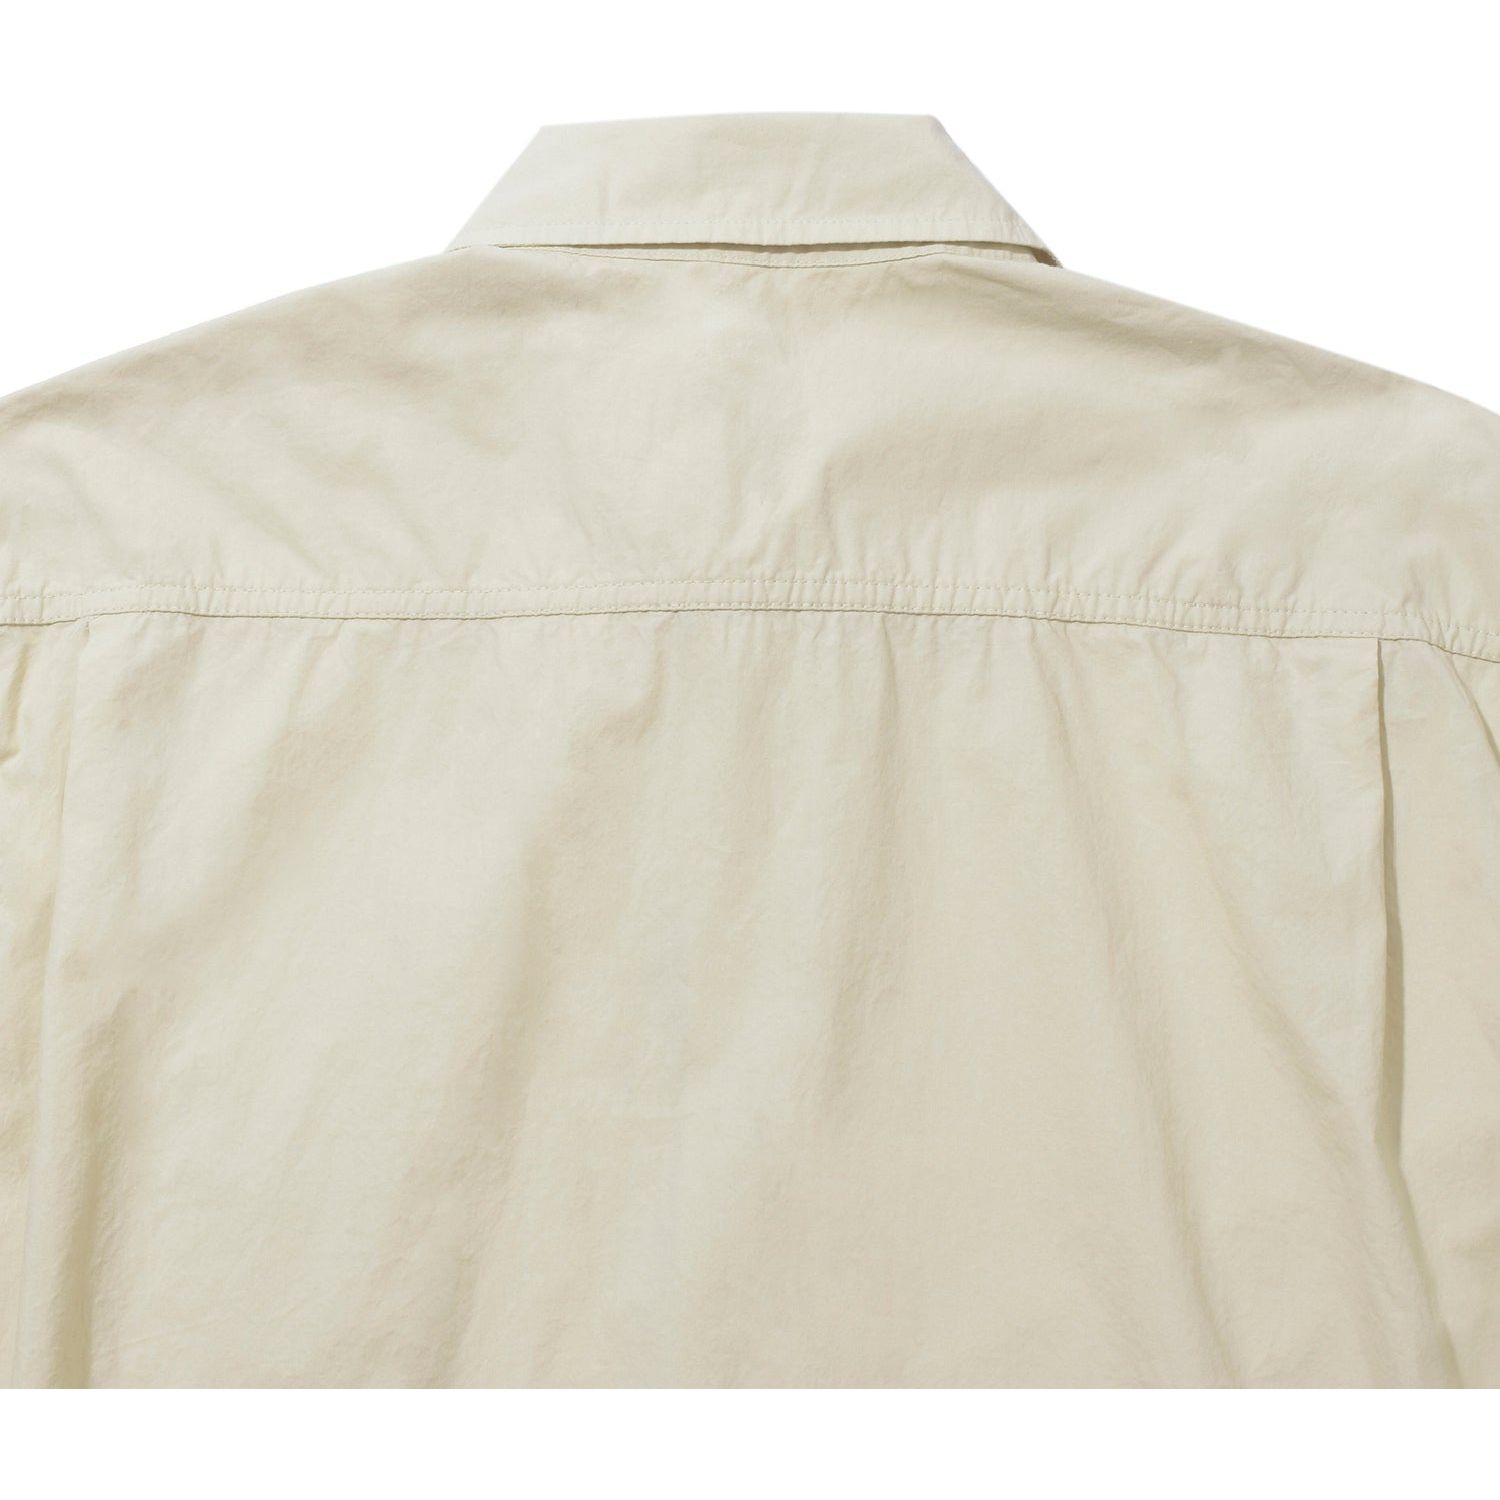 Kappy SS24 U Shirting Relaxed Cotton Shirt, Beige